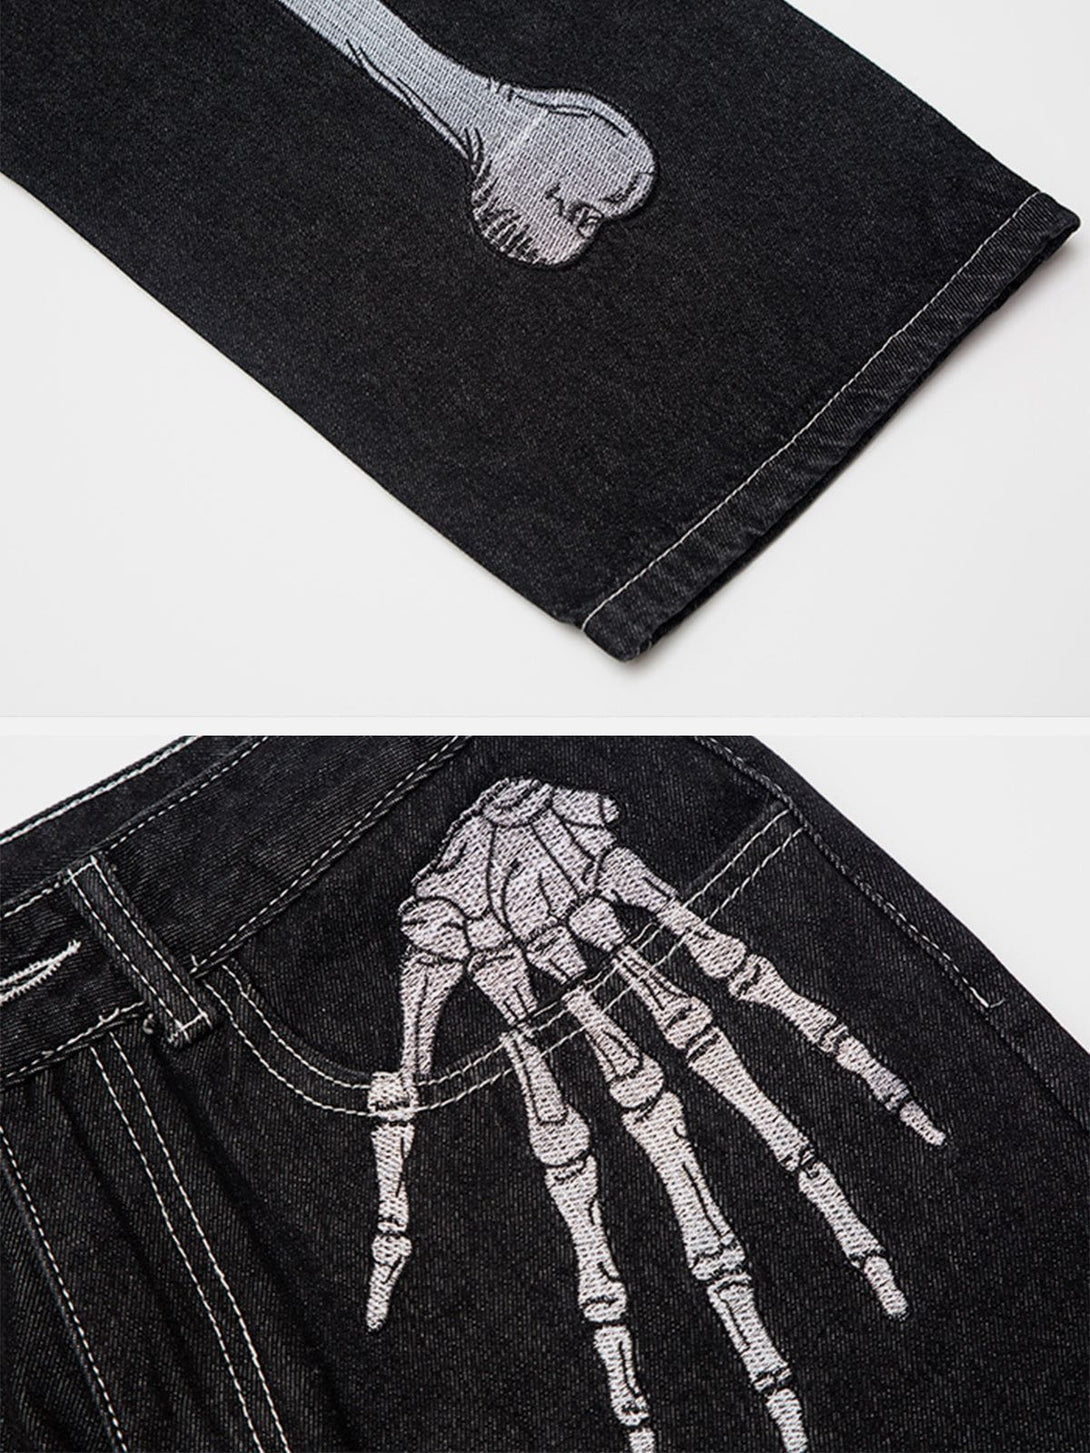 Majesda® - Vintage Skull Bone Embroidery Jeans outfit ideas streetwear fashion